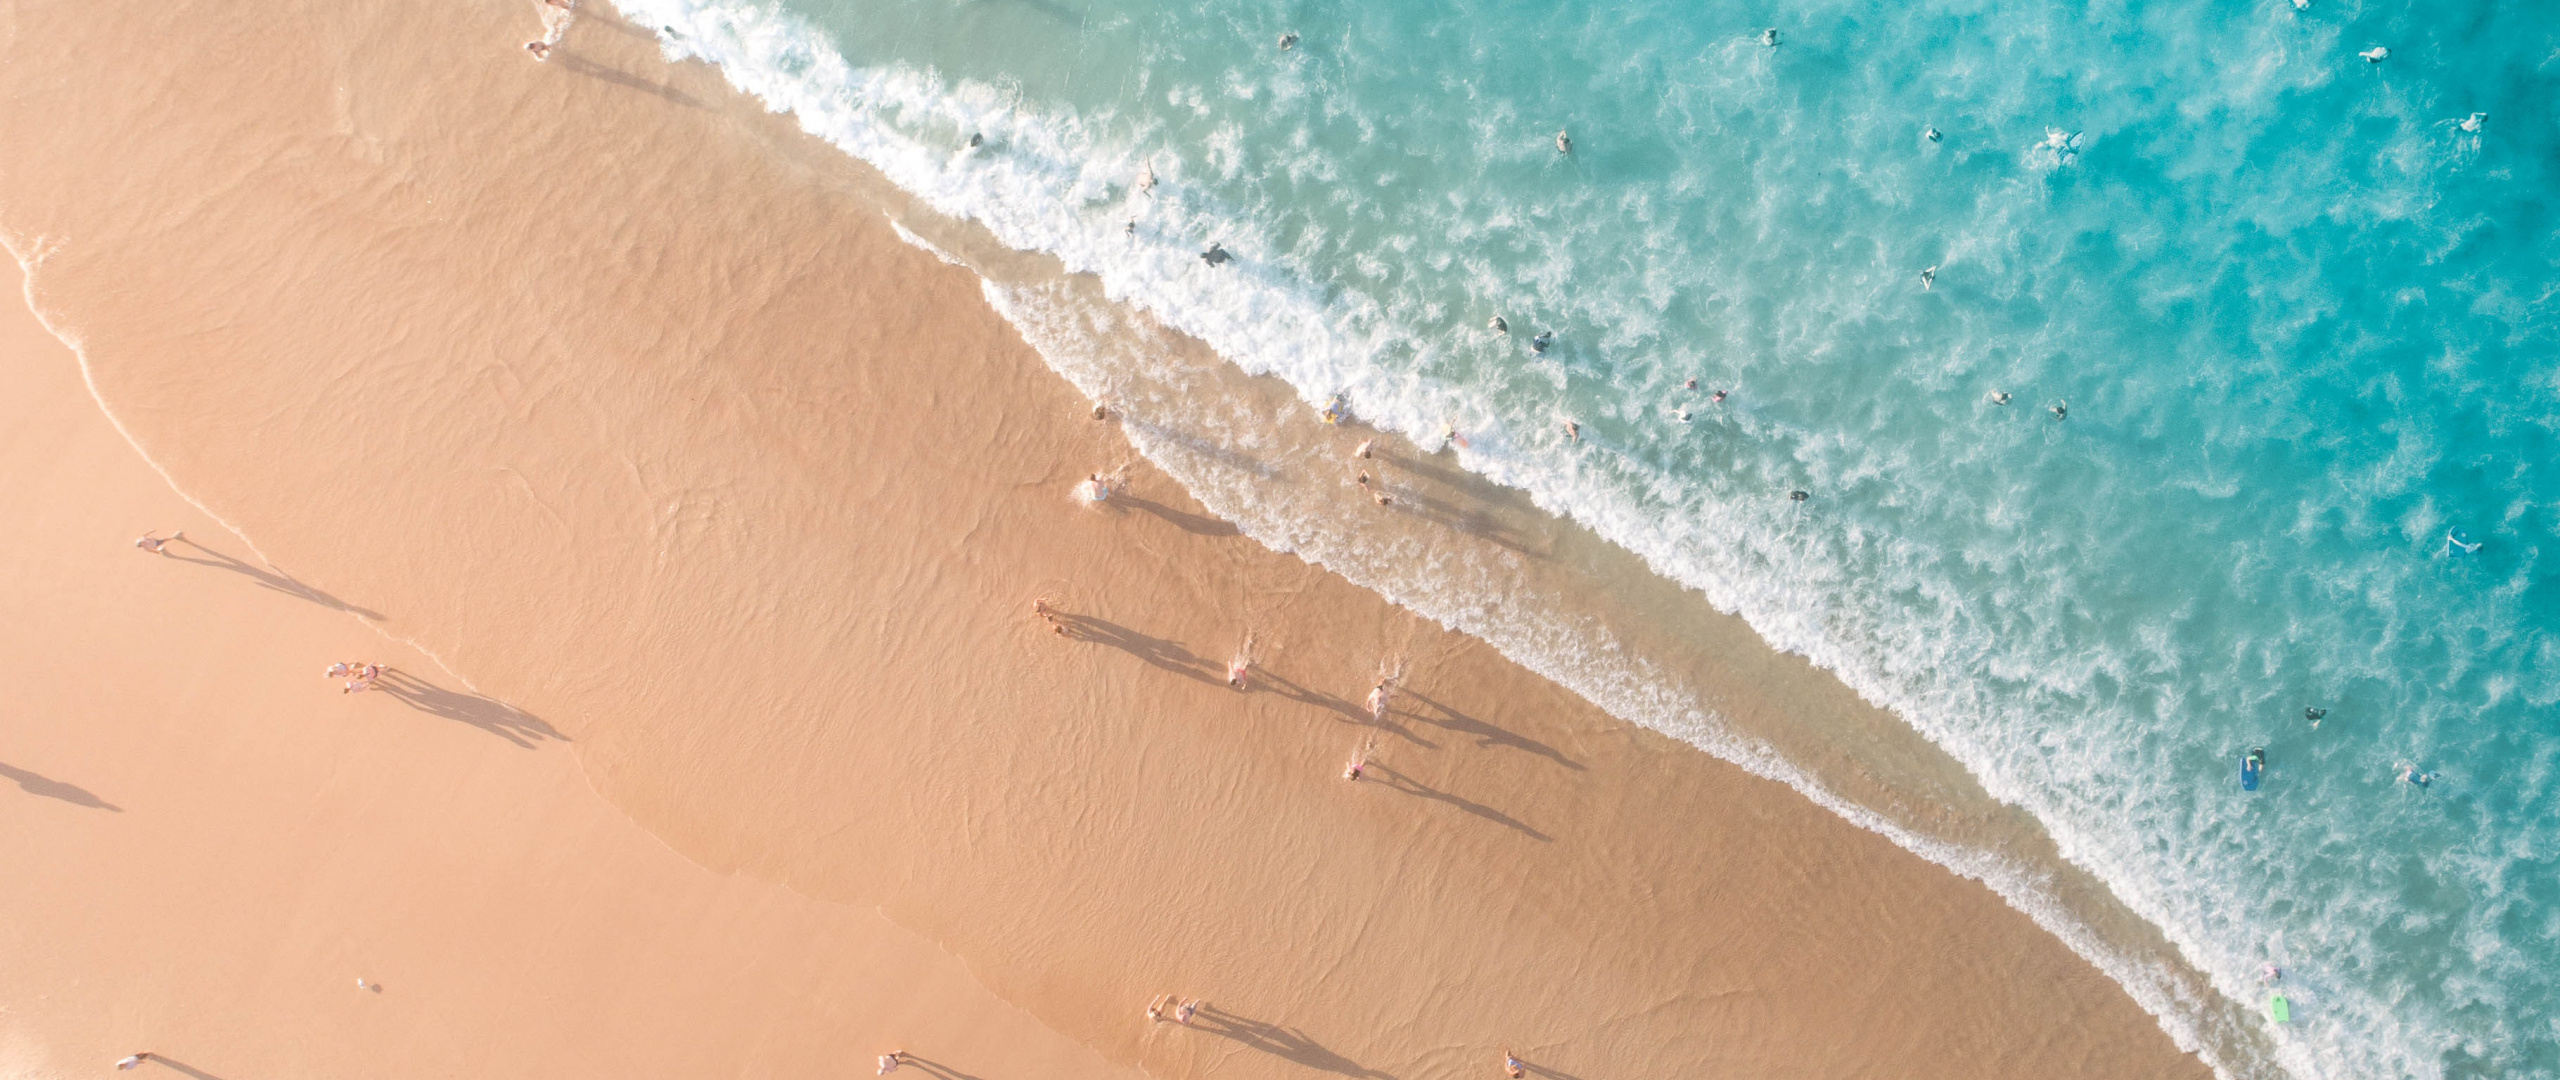 Download Aerial view, beach, nature, summer wallpaper, 2560x Dual Wide, Widescreen